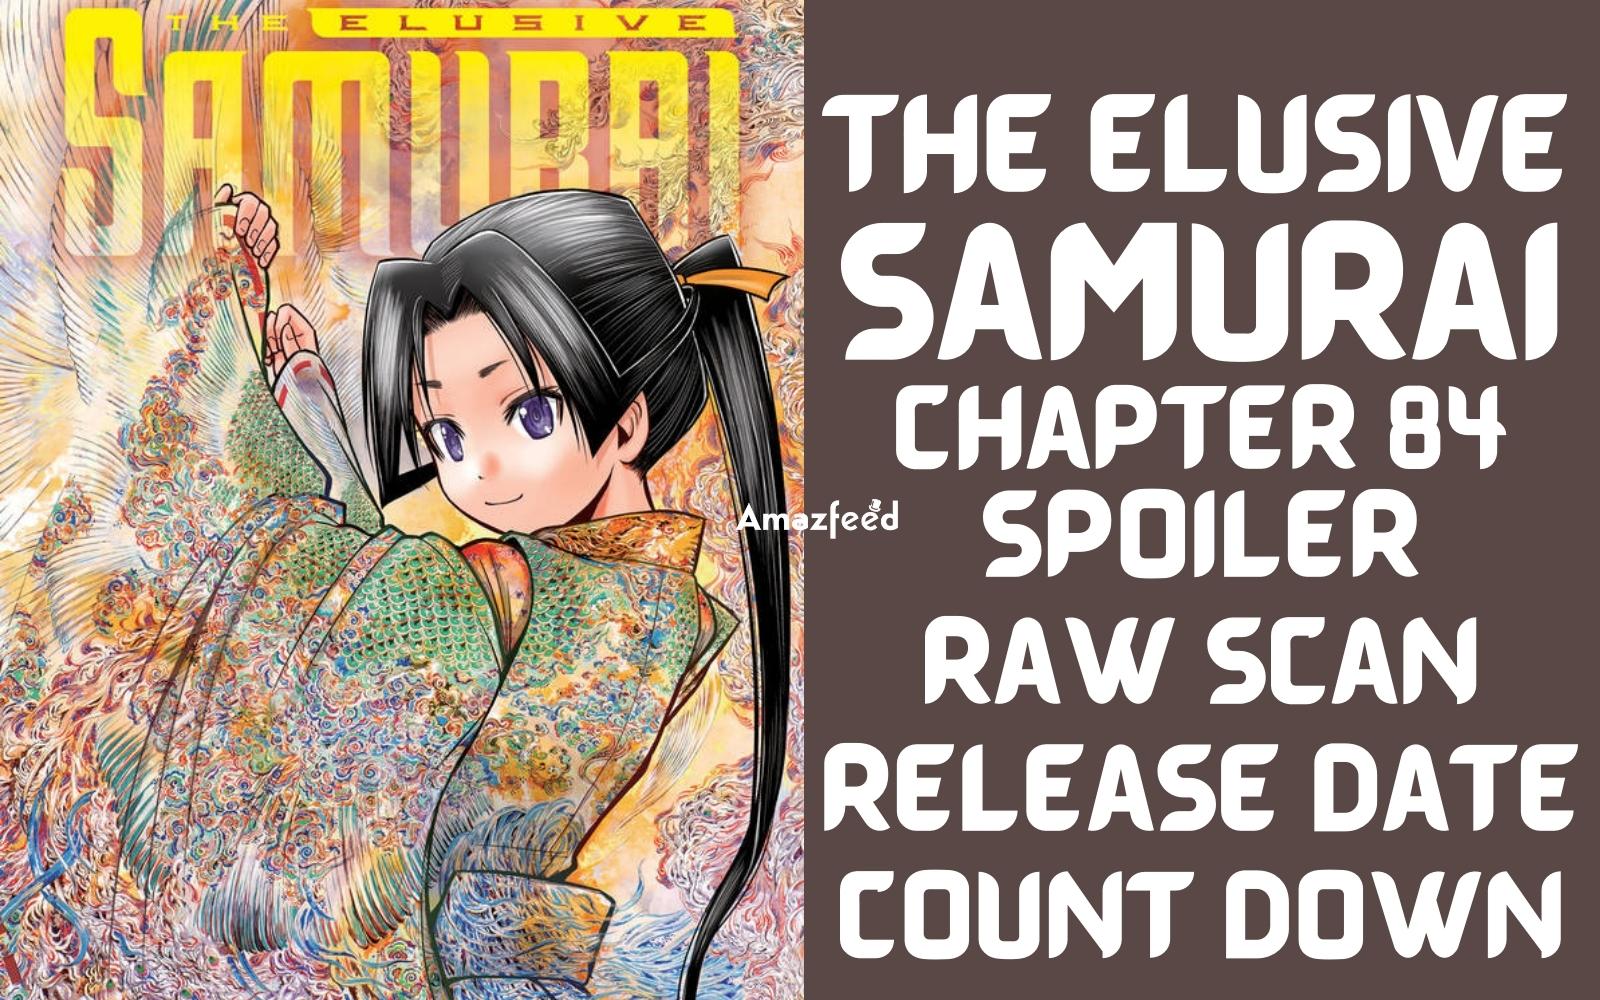 The Elusive Samurai Chapter 84 Spoiler, Release Date, Raw Scan, CountDown